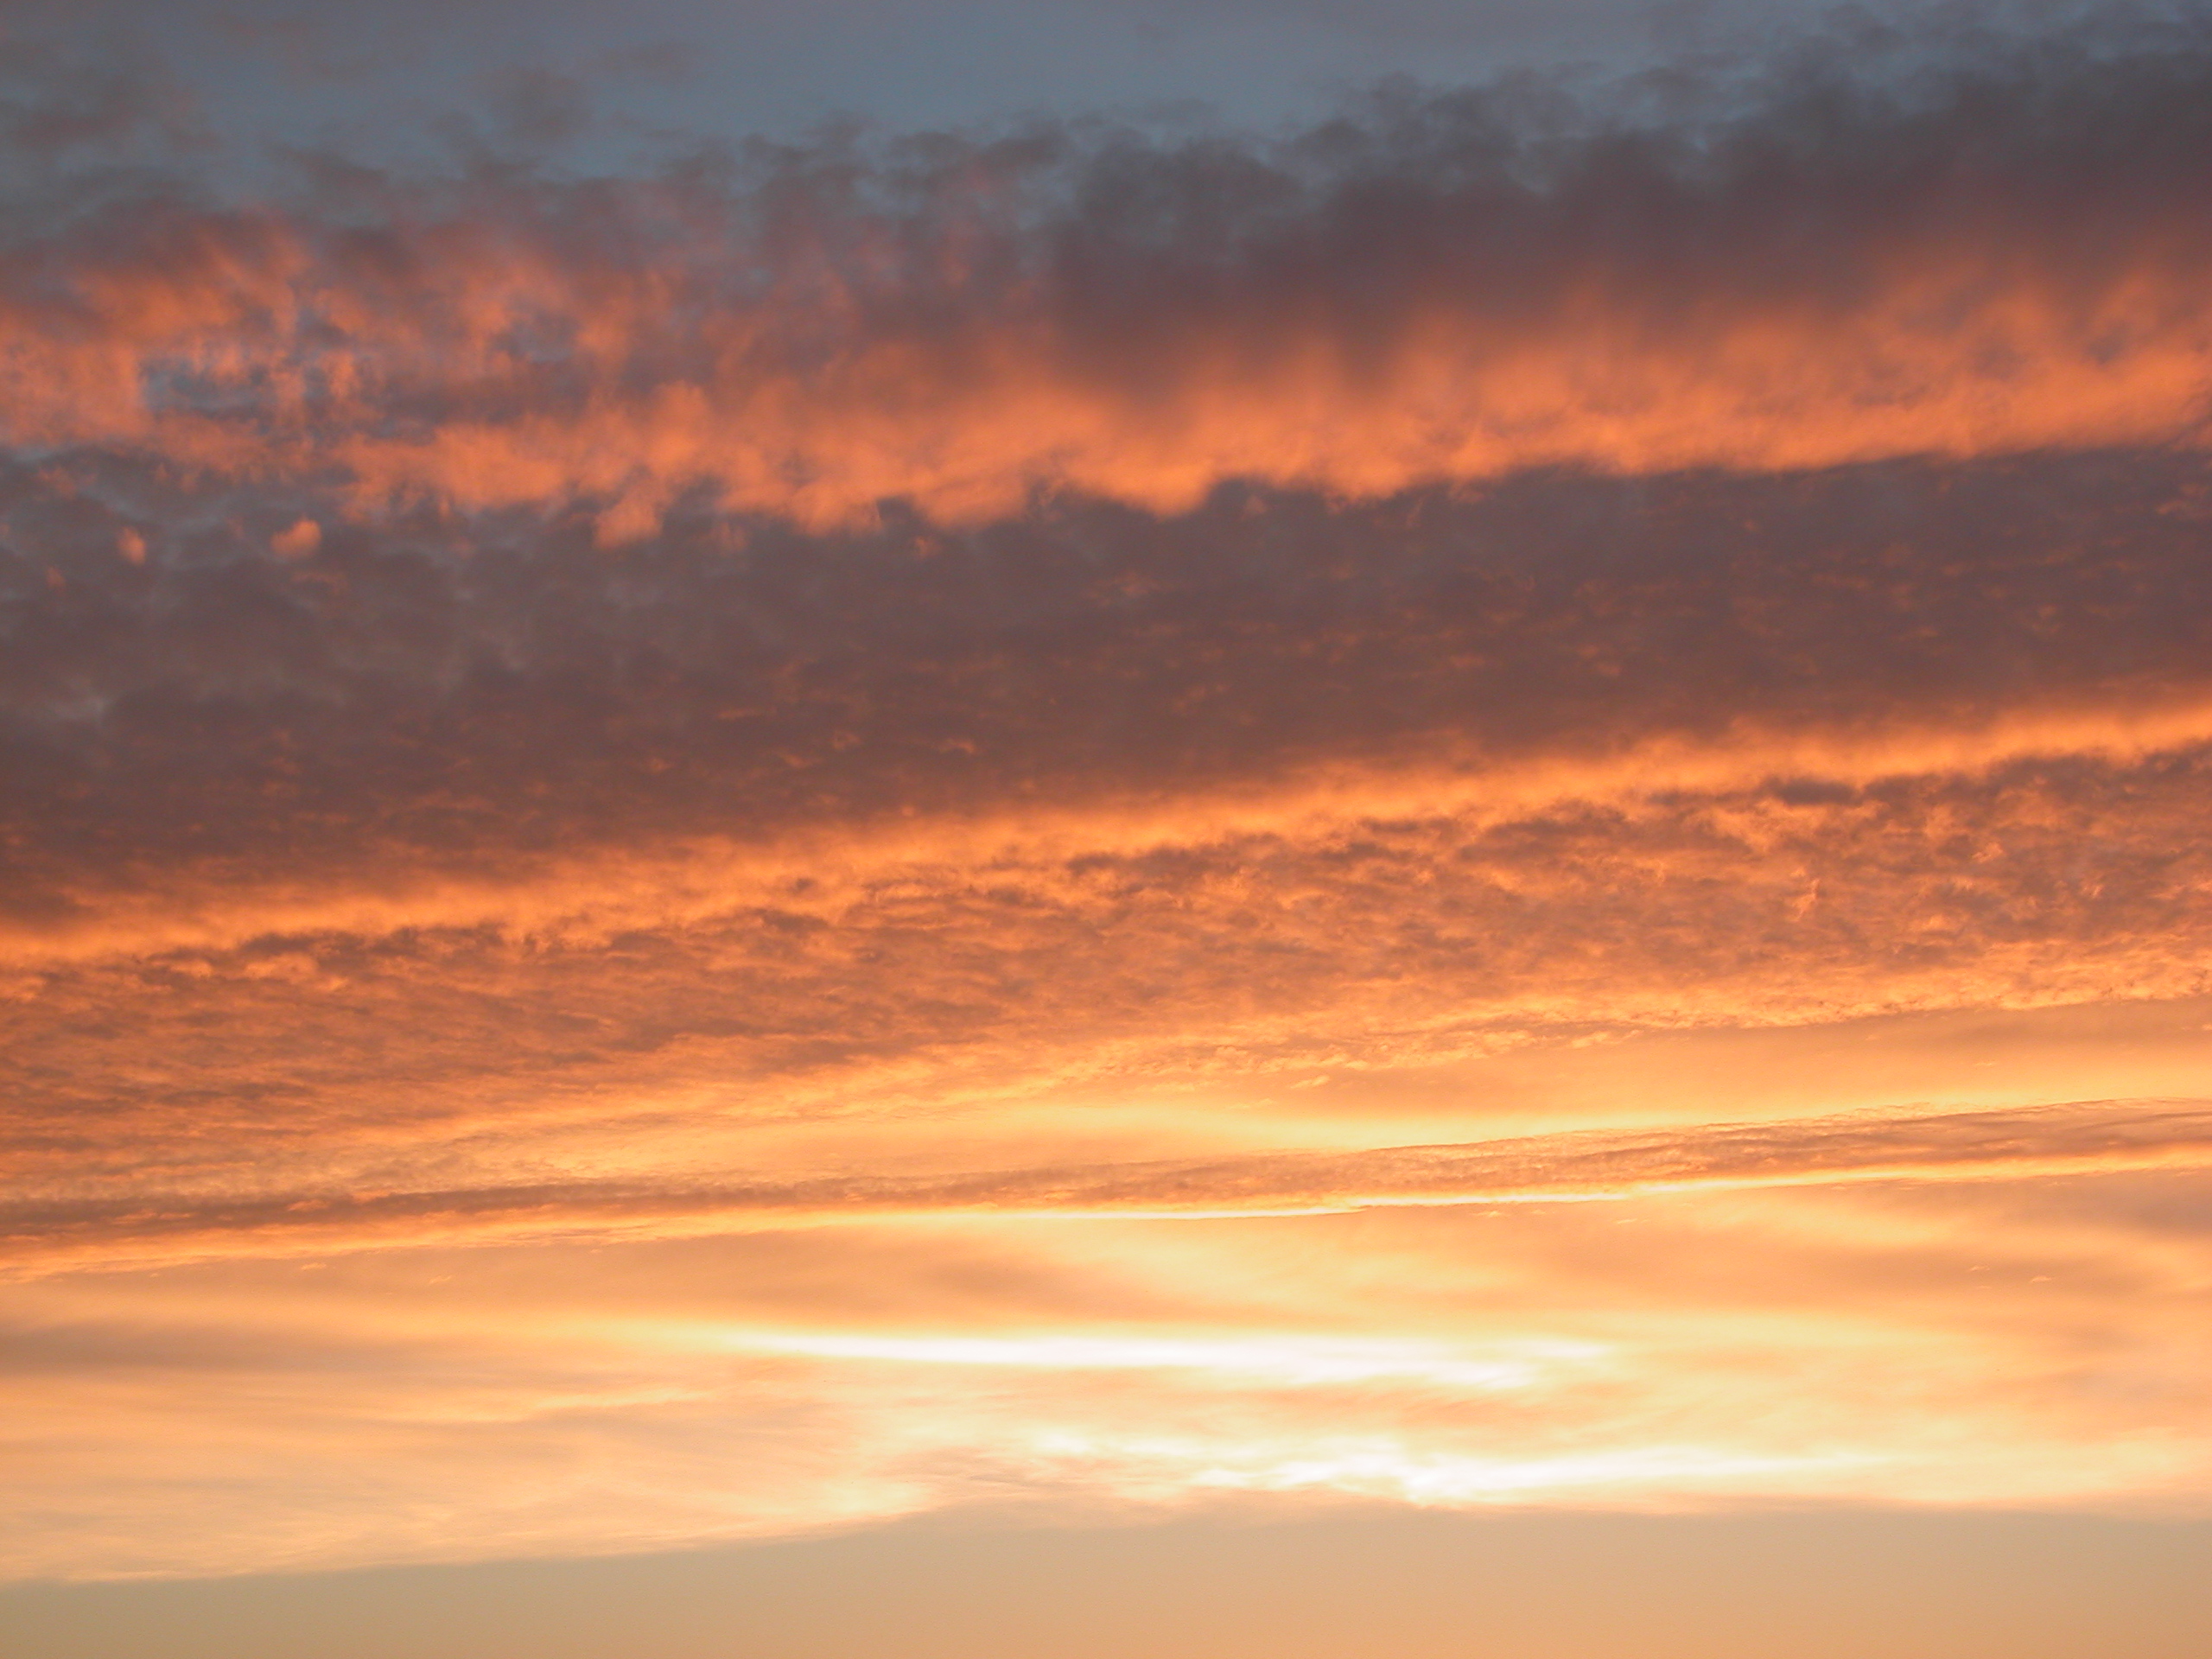 Imageafter Photos Elements Clouds Sky Sunset Dusk Dawn Sunrise Cloud